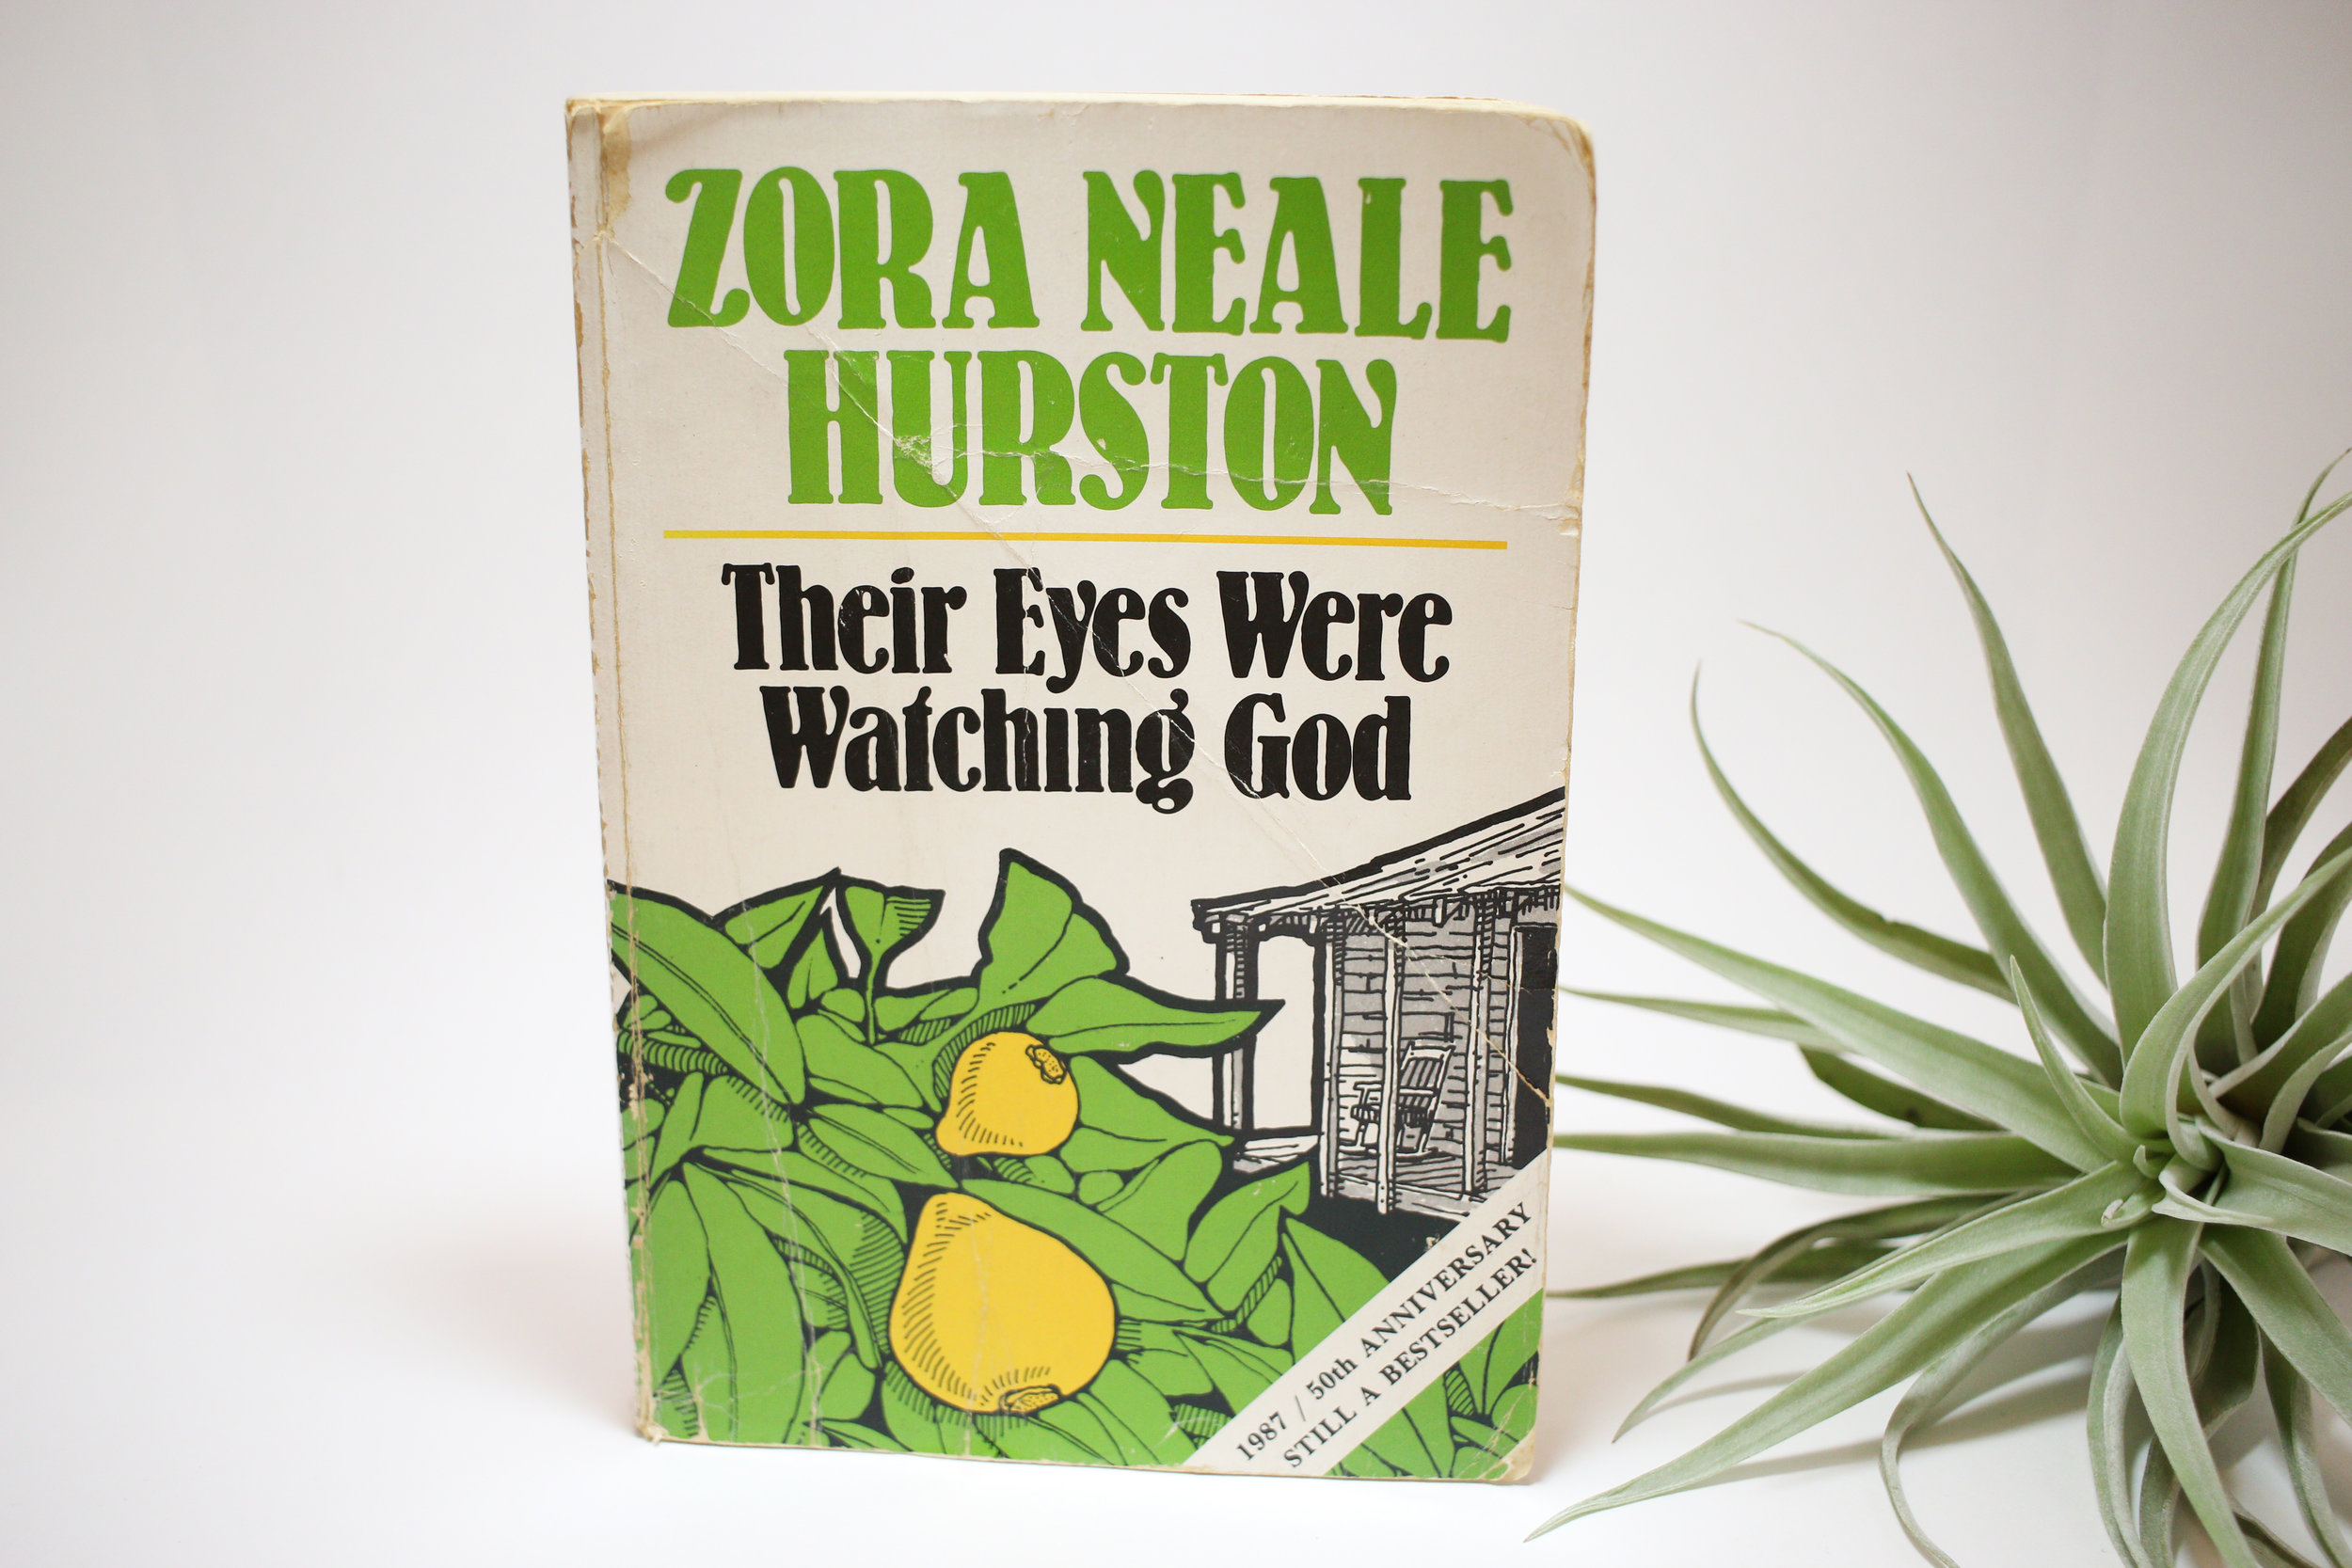 "Their Eyes Were Watching God" by Zora Neale Hurston